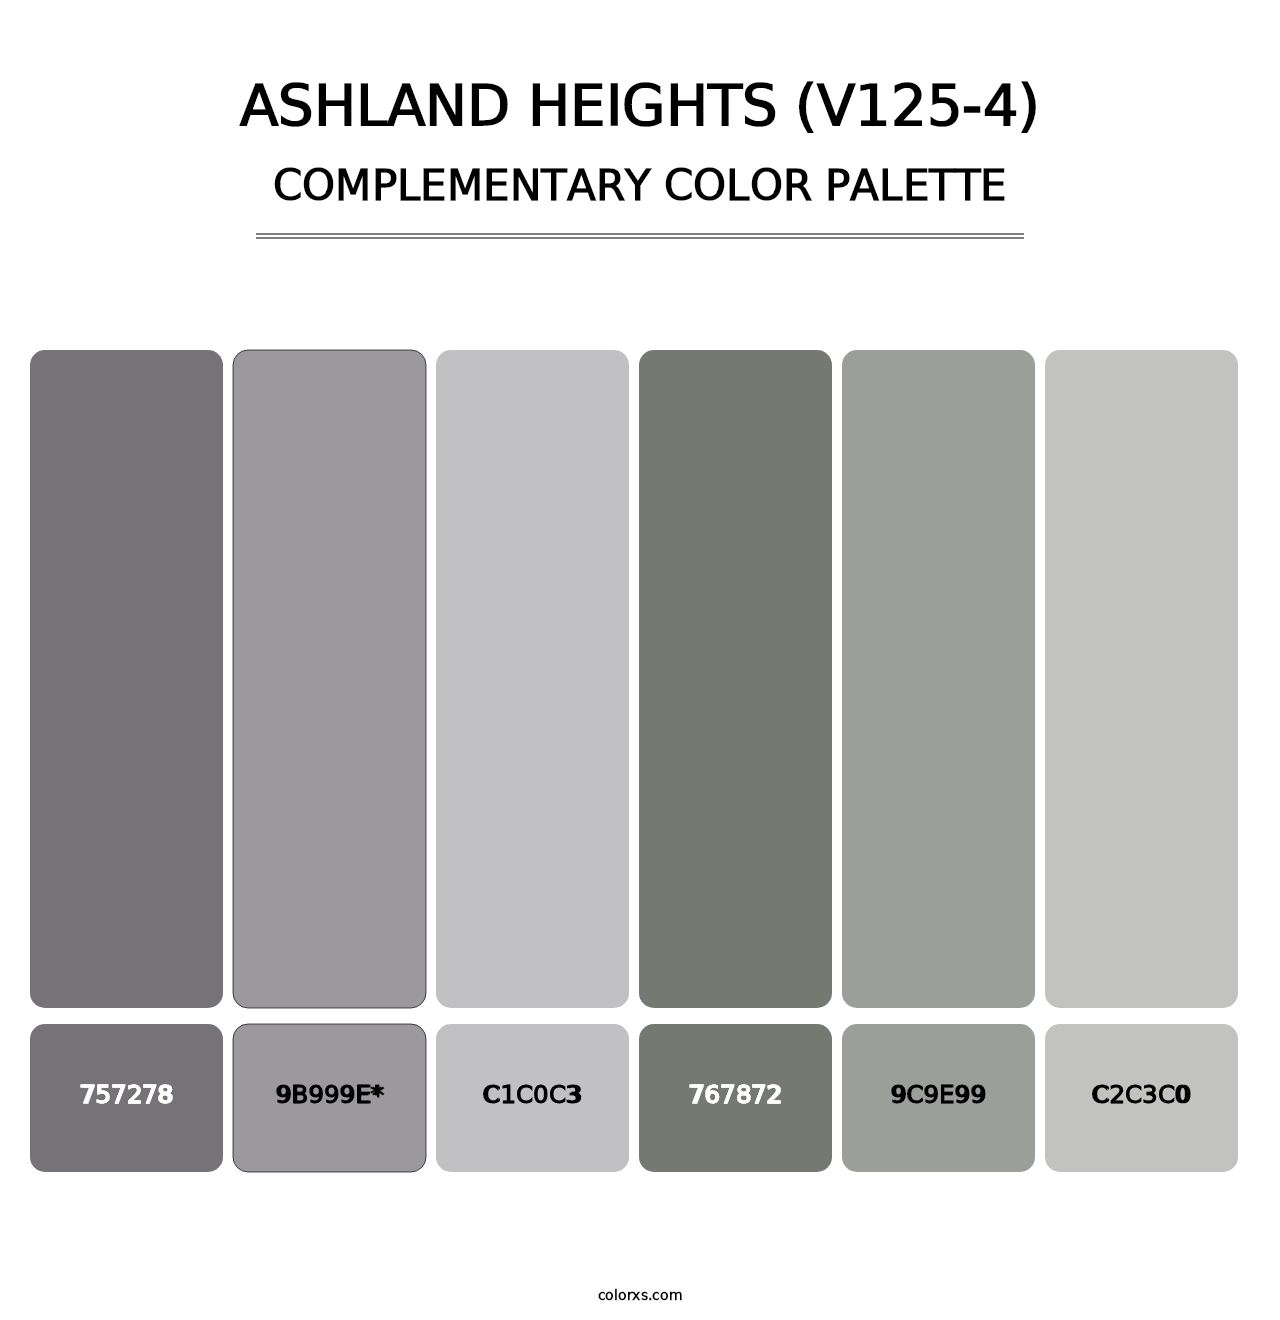 Ashland Heights (V125-4) - Complementary Color Palette